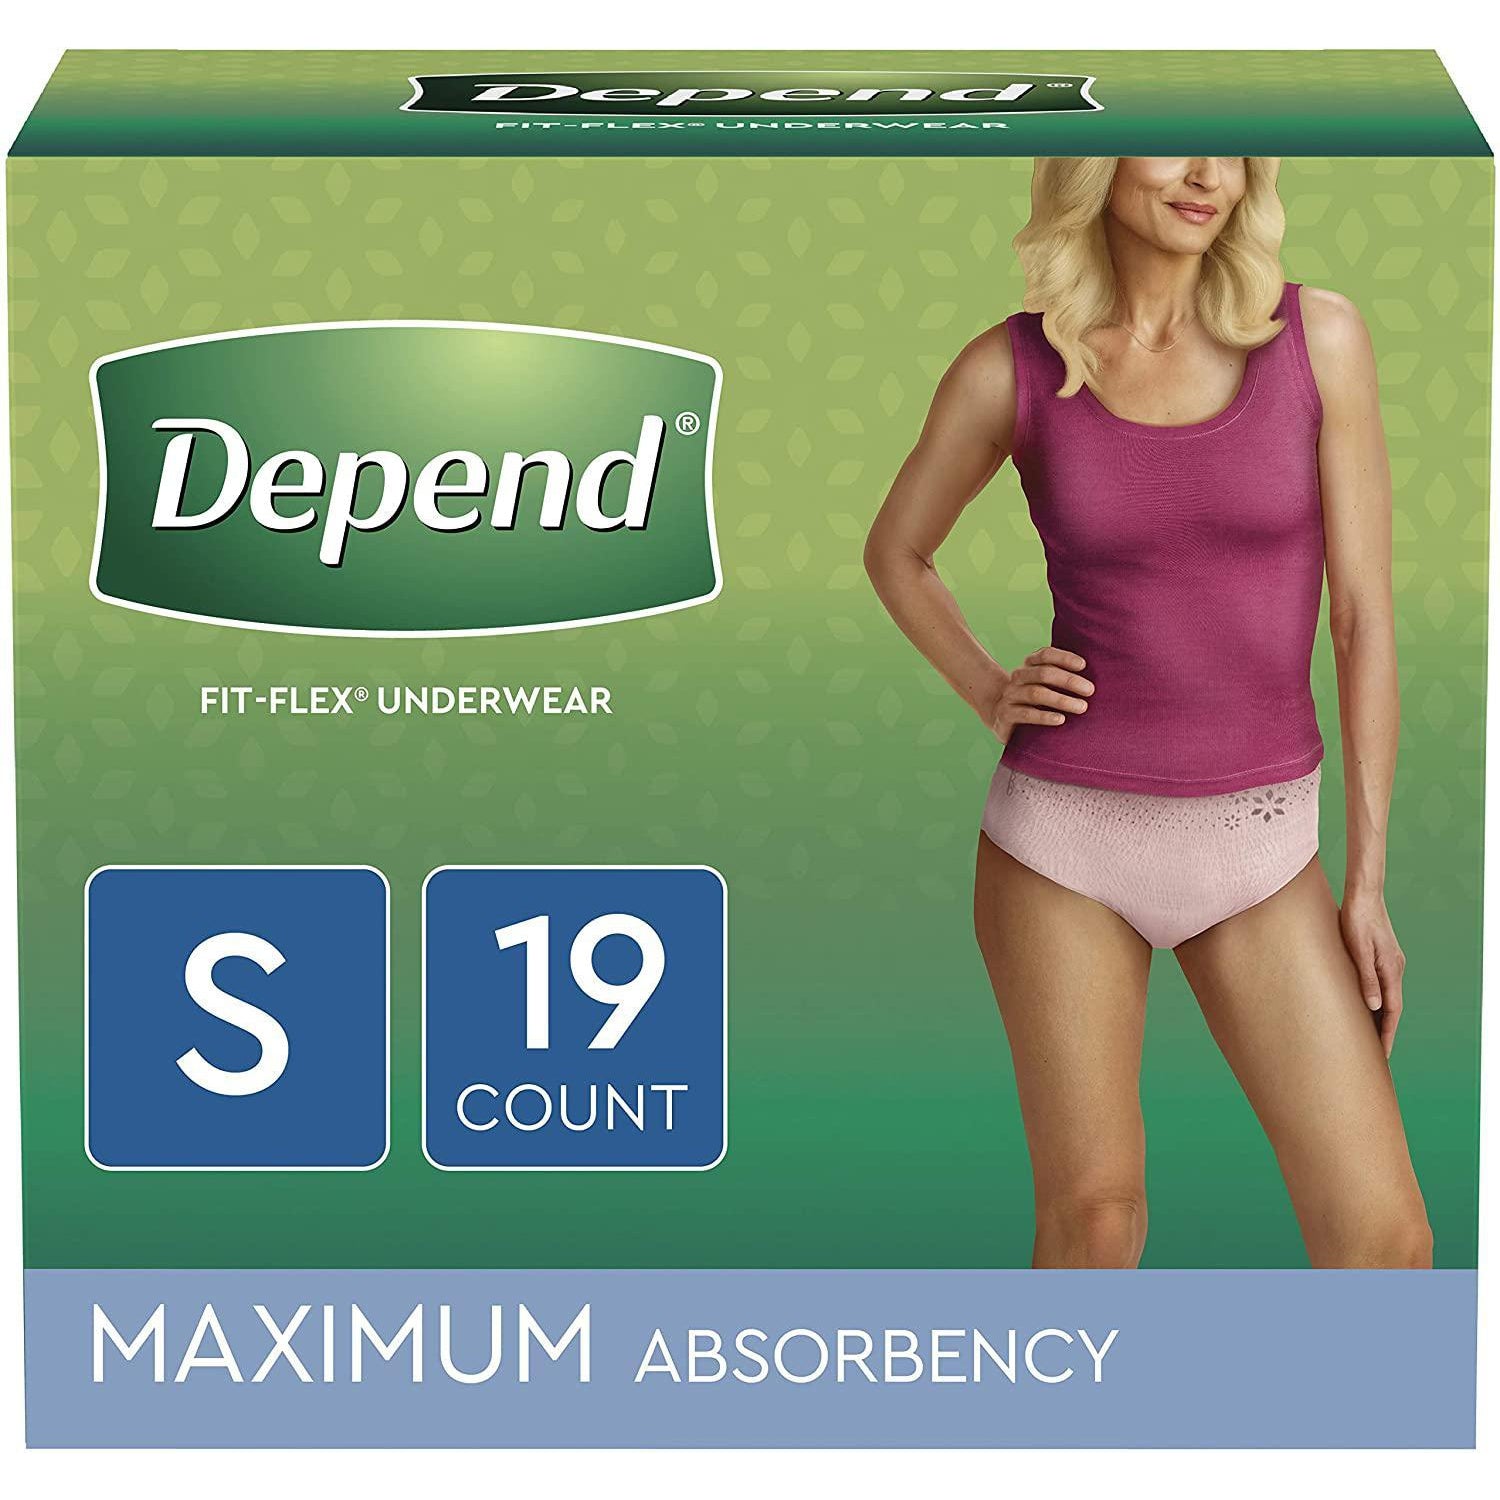 Depend FIT-FLEX Incontinence Underwear for Women, Disposable, Maximum